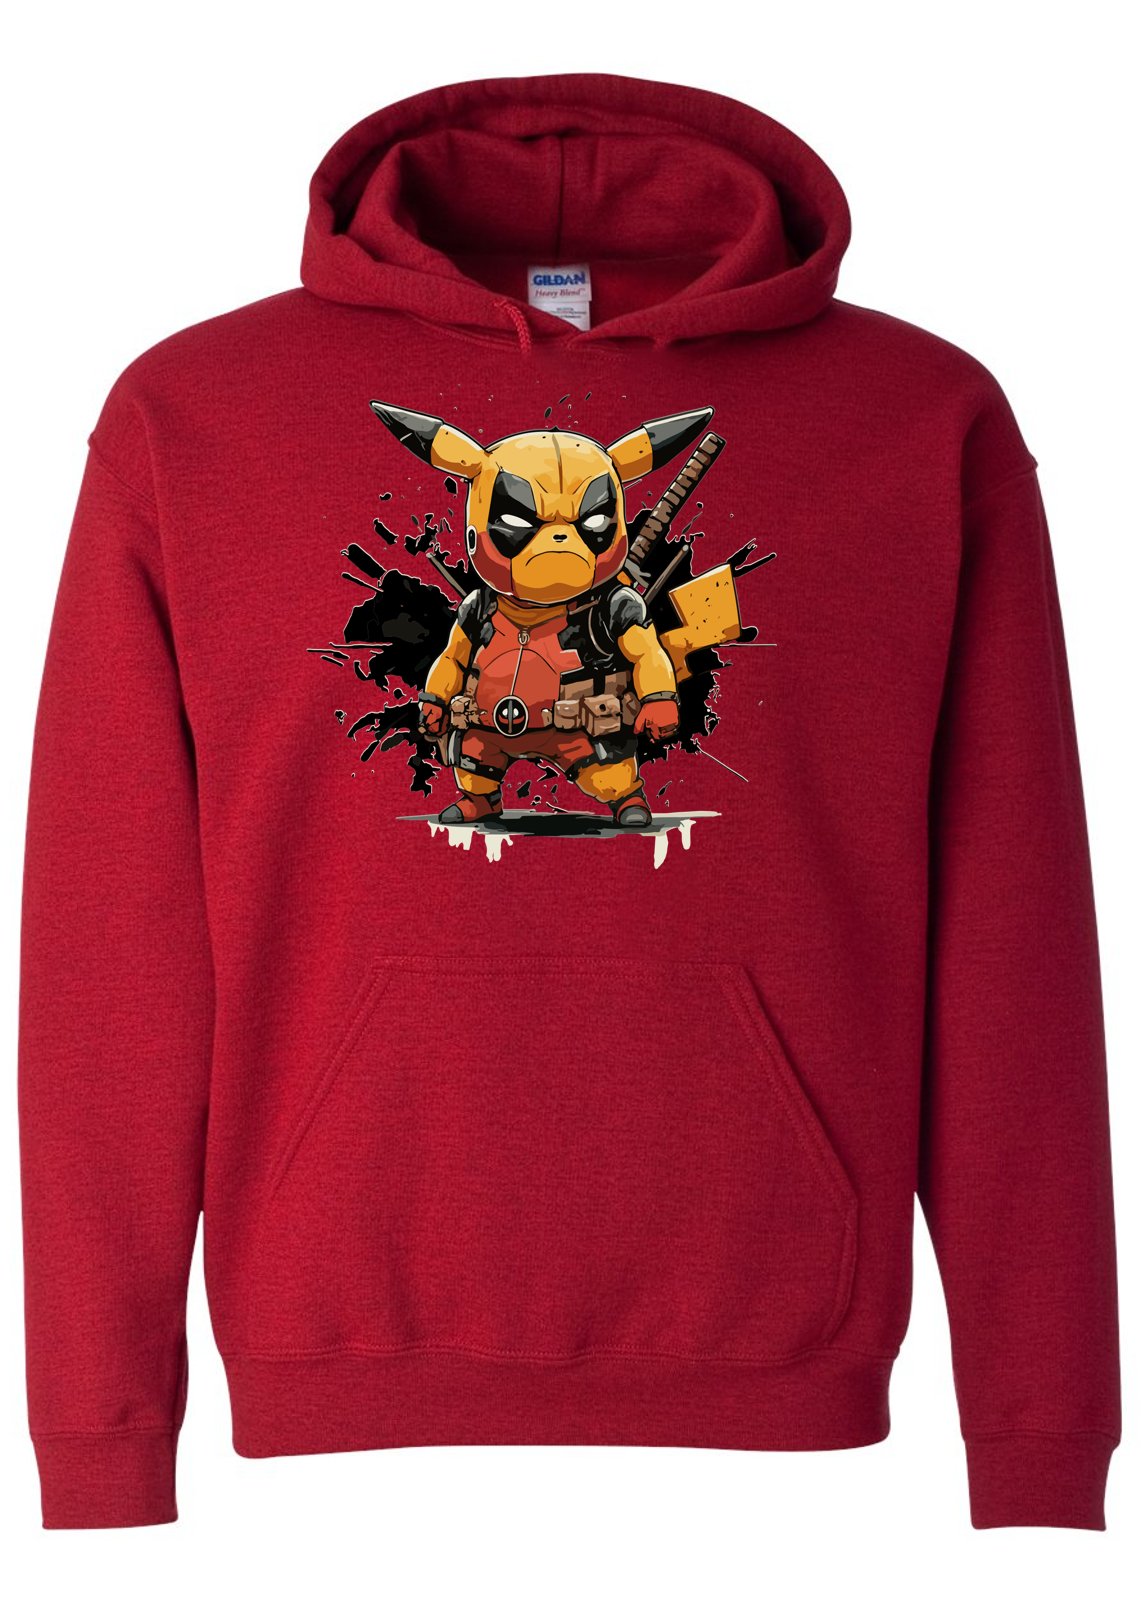 Exclusive Pikachu inspired as Deadpool Art Hoodie - Limited Stock! -